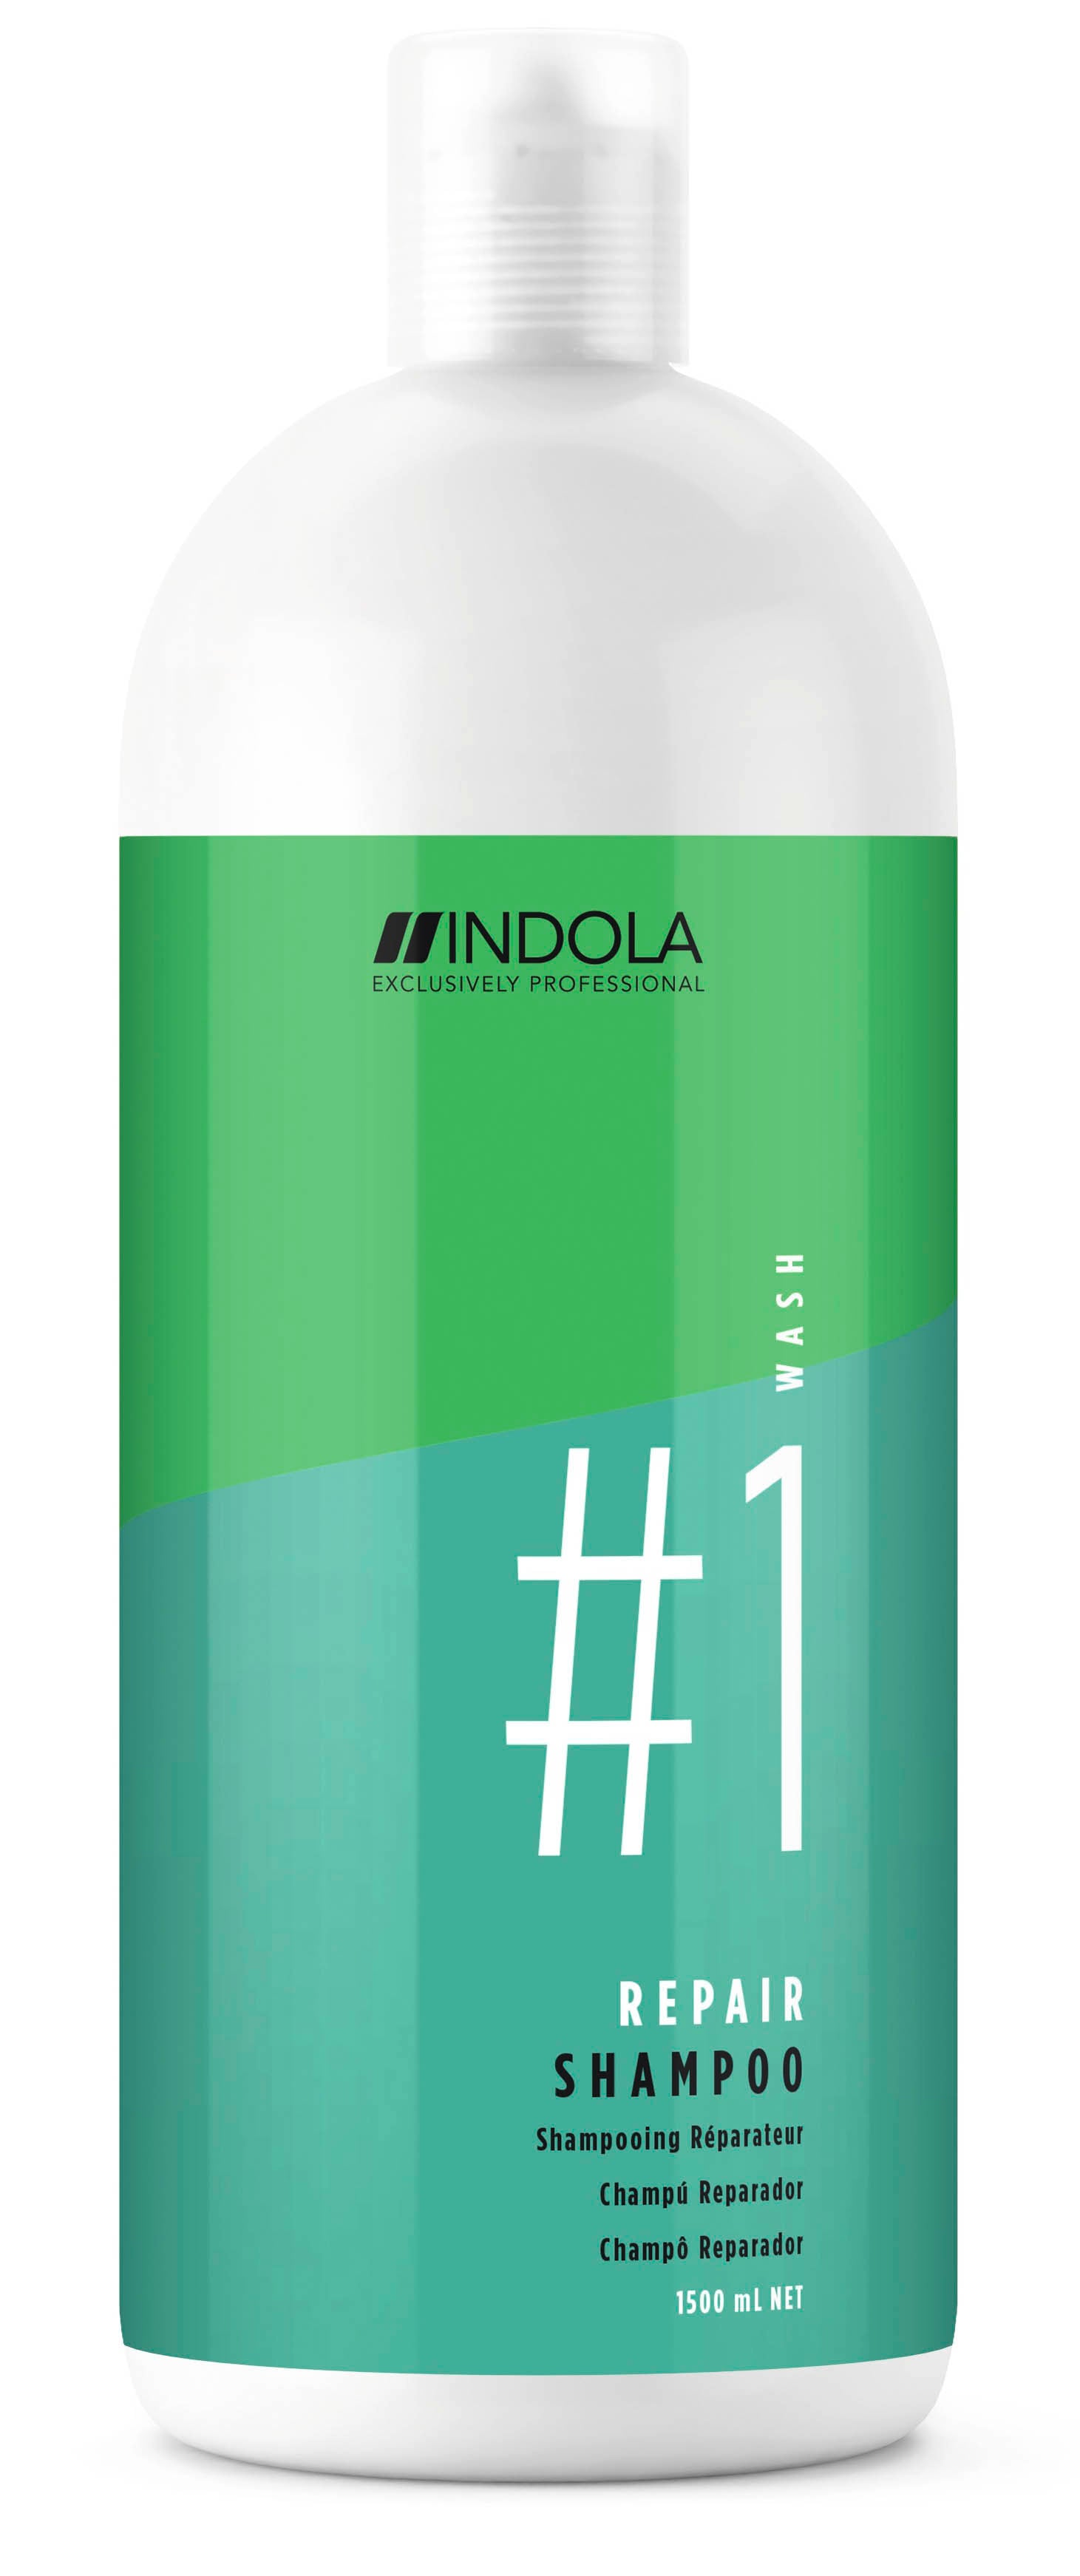 Indola Repair shampoo 1500ml